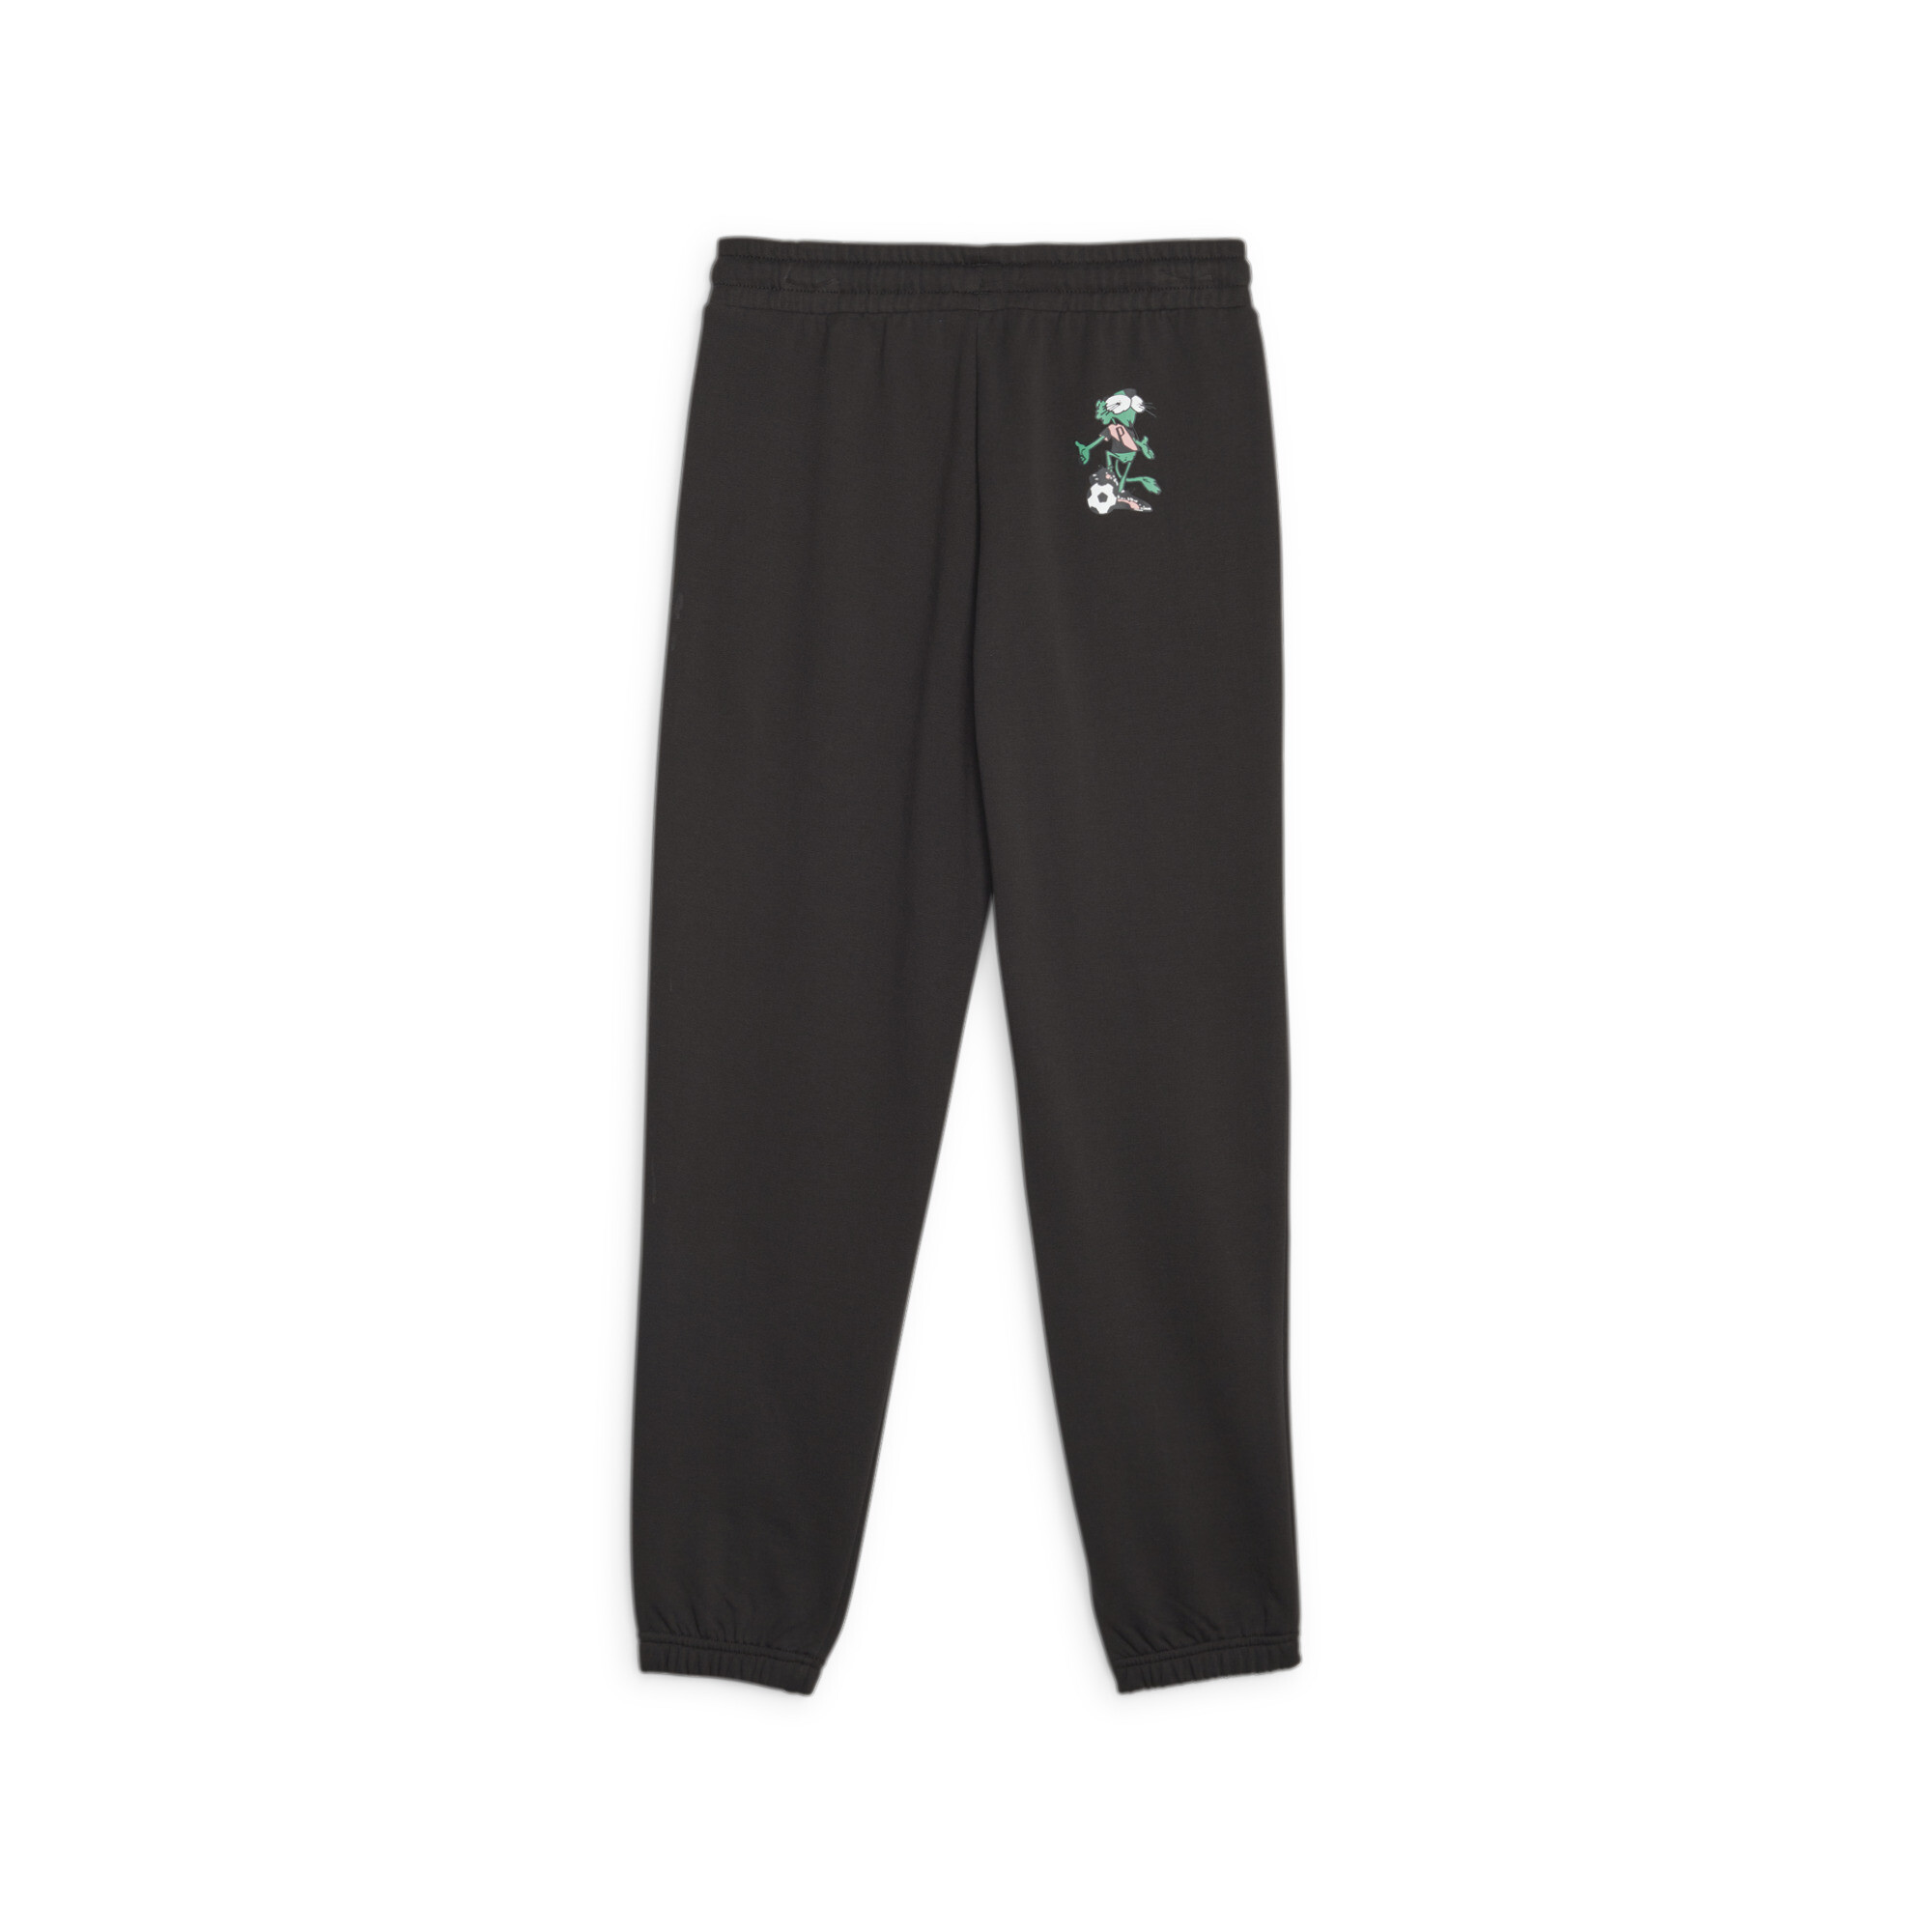 Classics SUPER PUMA Sweatpants In Black, Size 9-10 Youth